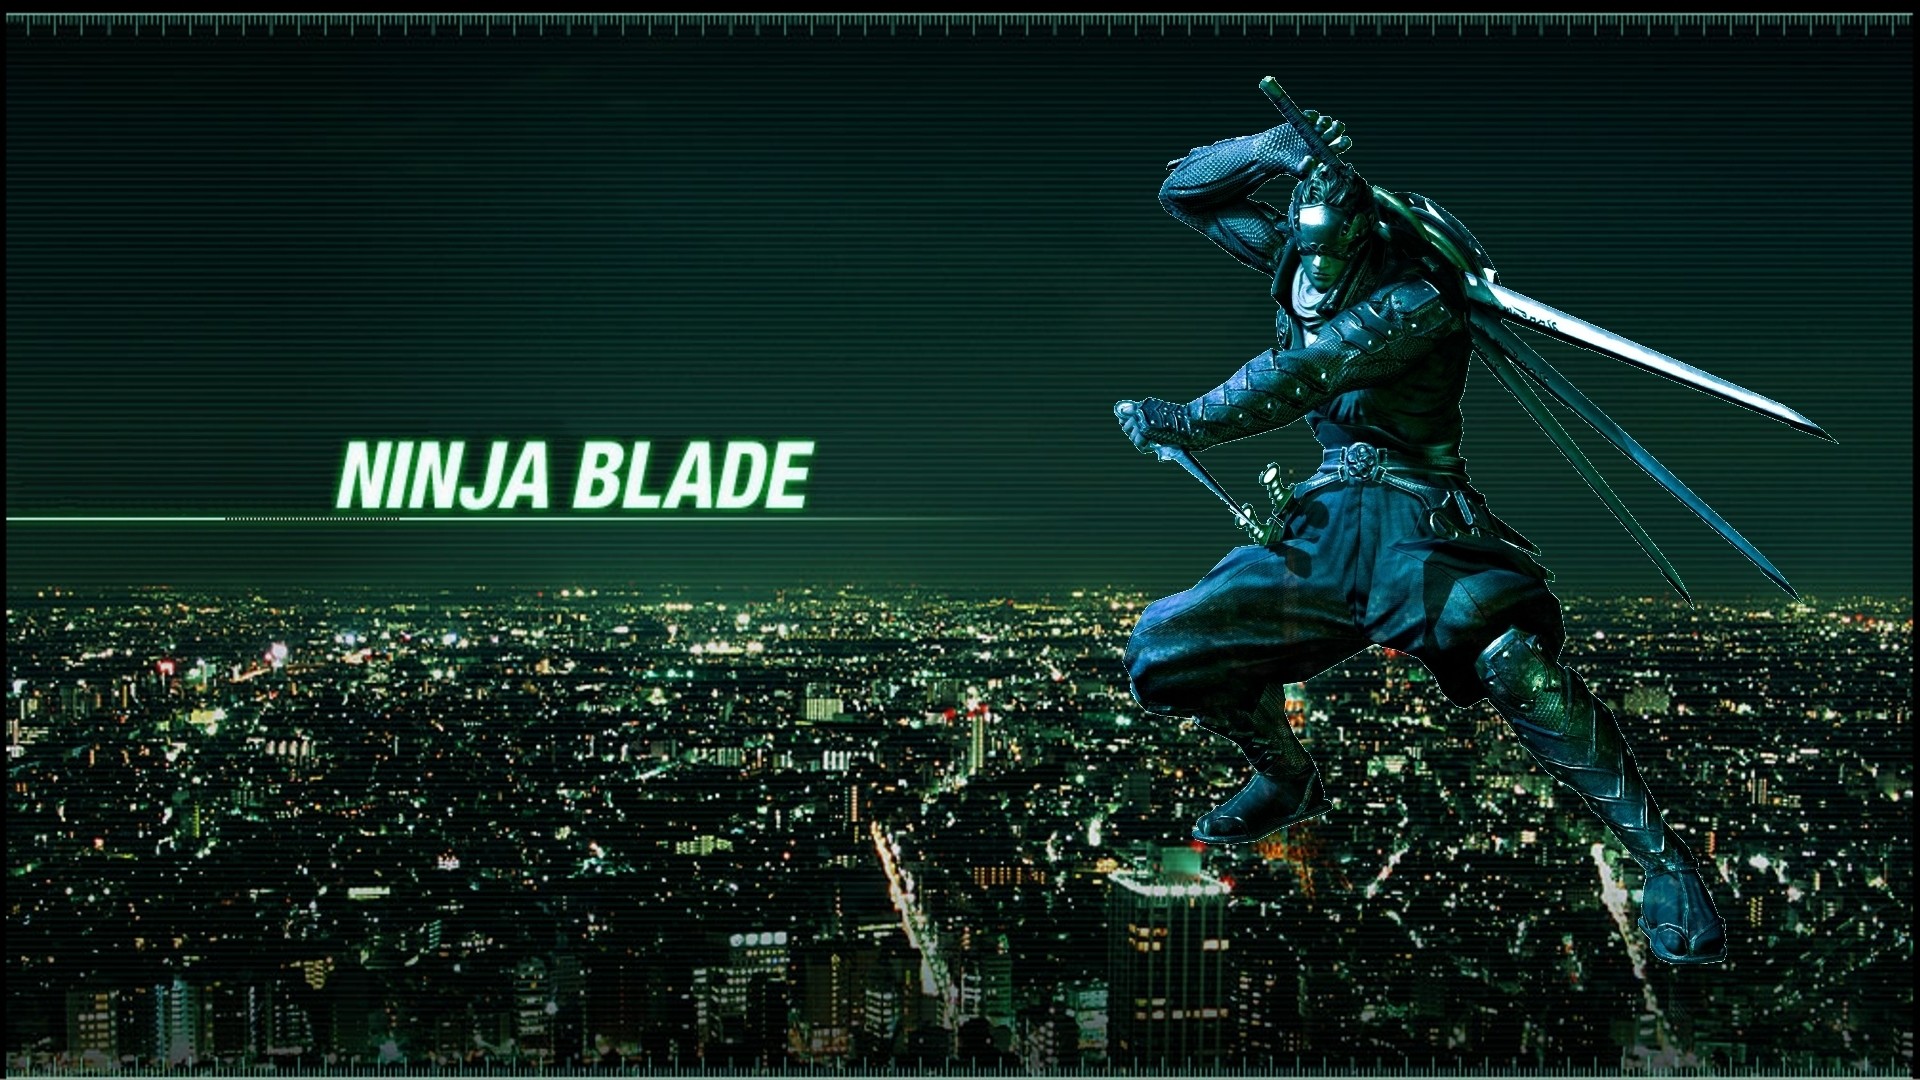 Ninja Blade Pc Game Wallpaper In Hd ·① Wallpapertag